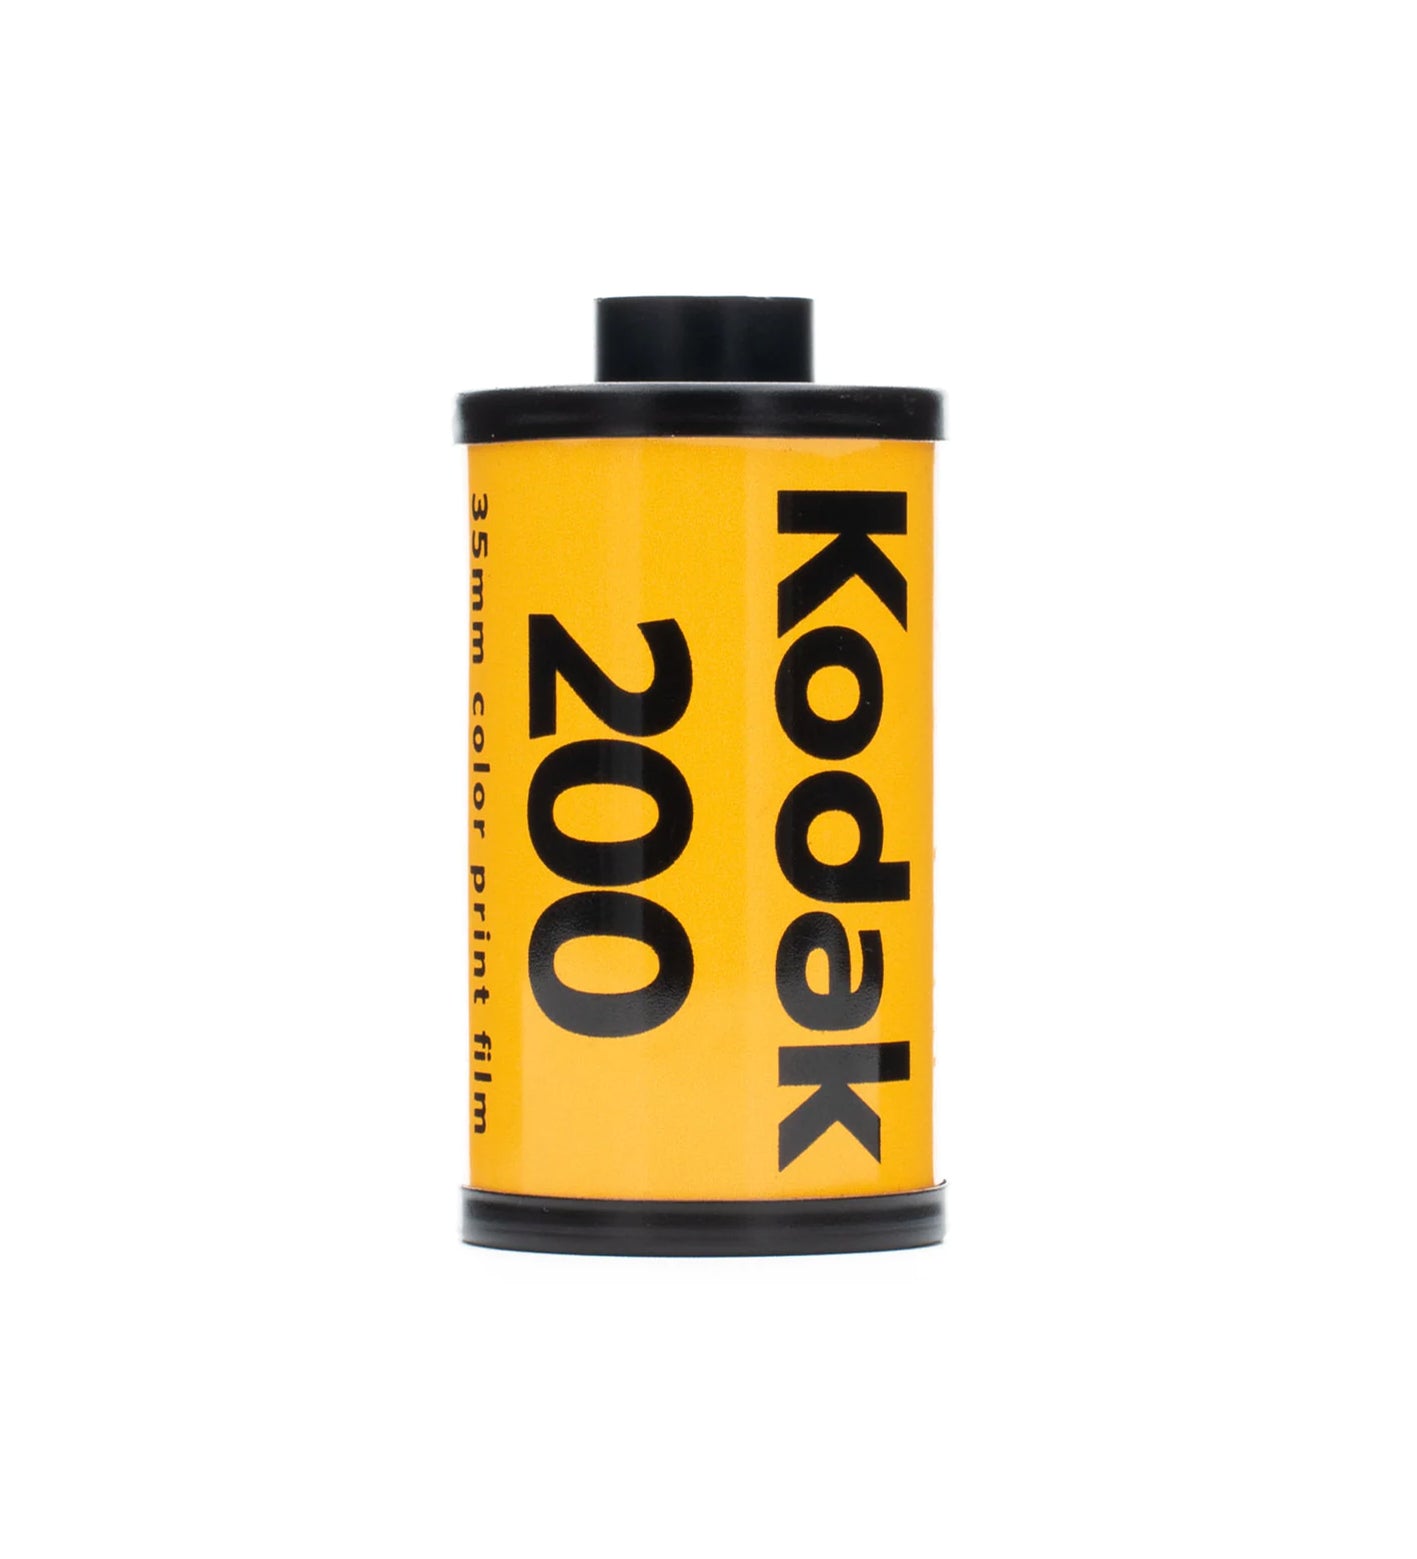 Kodak Gold 200 35mm Film 36 Exposures, 3 Pack (£30.99 incl VAT)